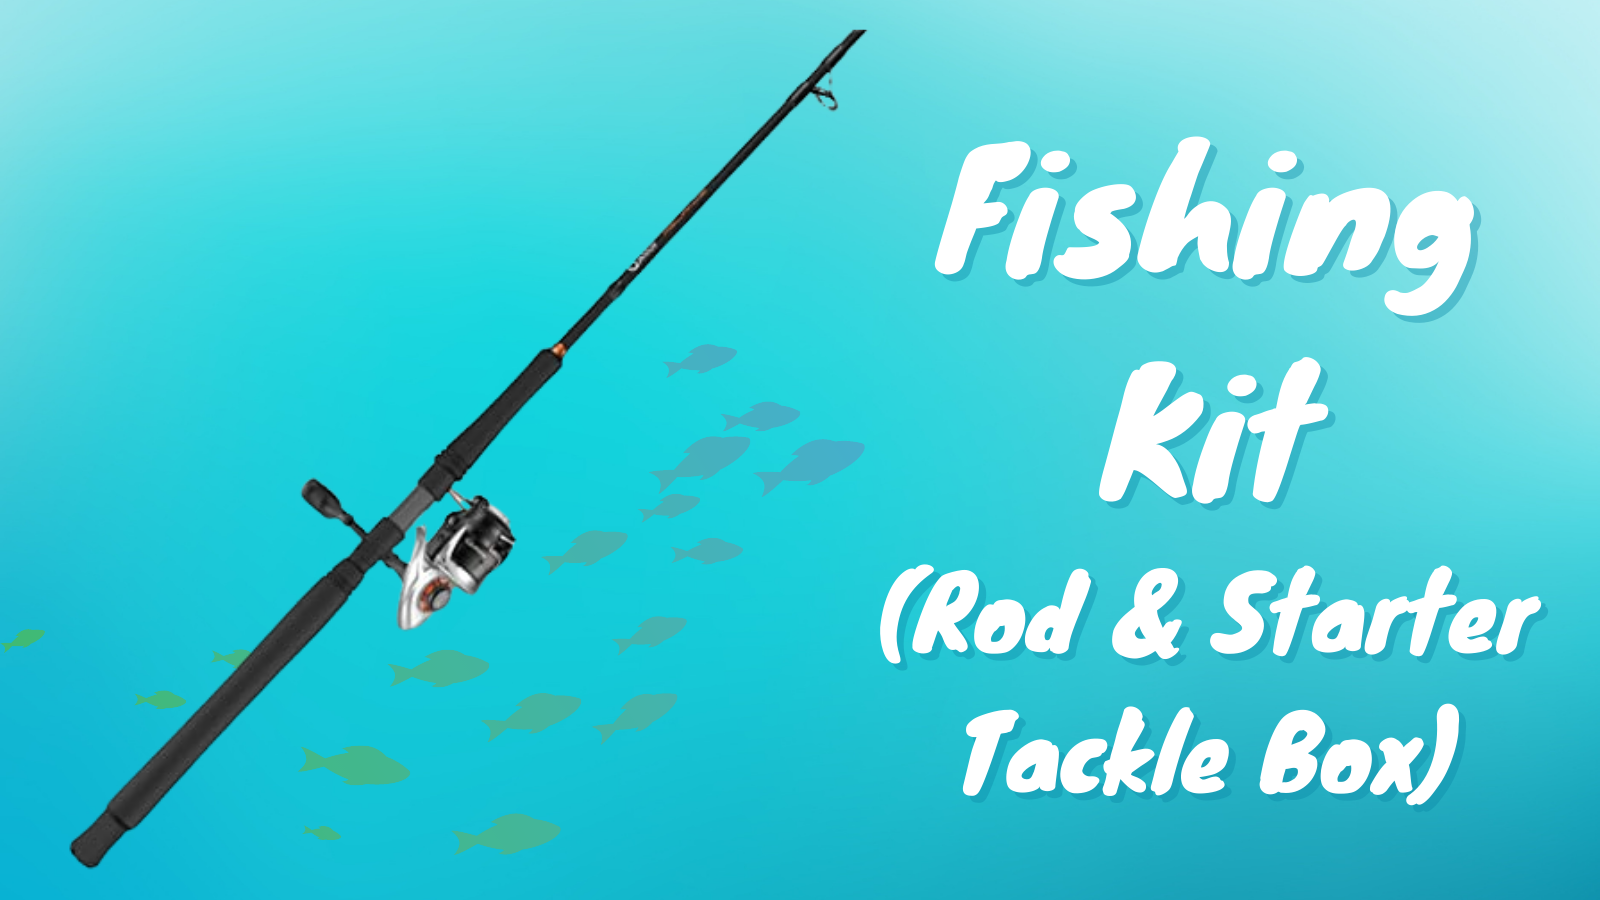 Fishing Kit Rod and starter tackle box